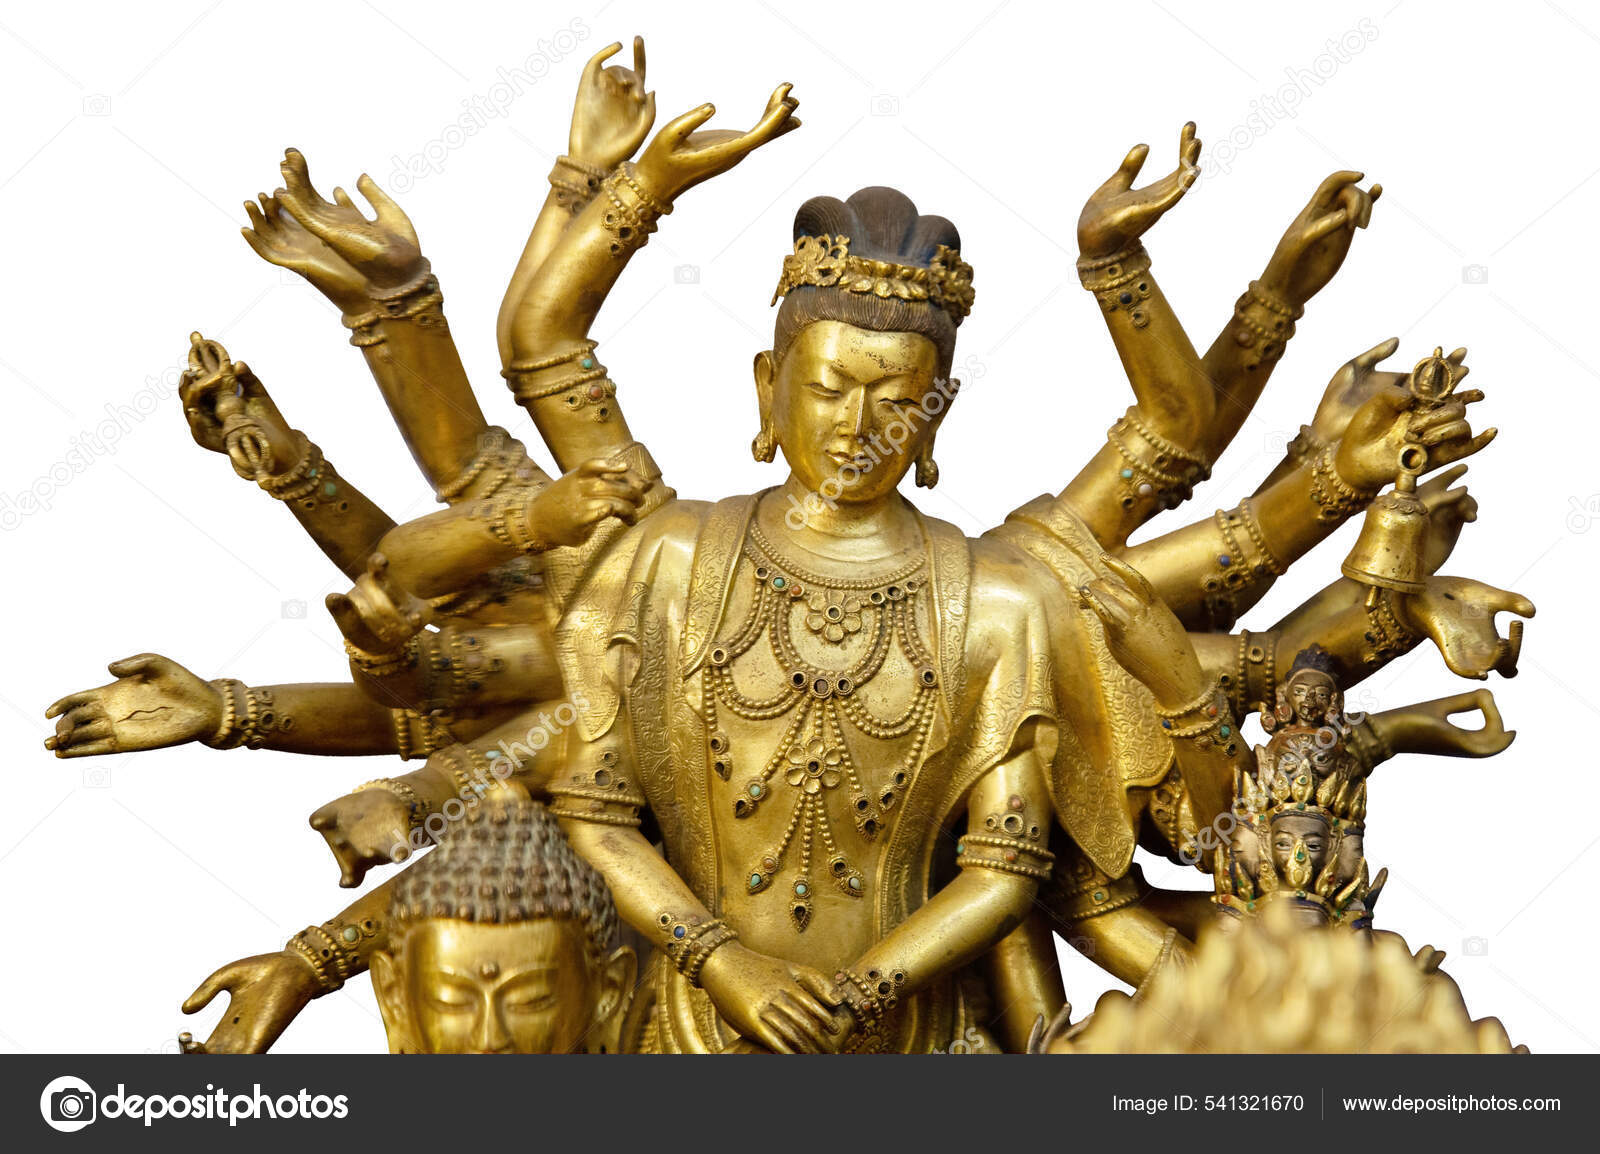 https://st.depositphotos.com/1000848/54132/i/1600/depositphotos_541321670-stock-photo-multi-armed-shiva-statue-isolated.jpg